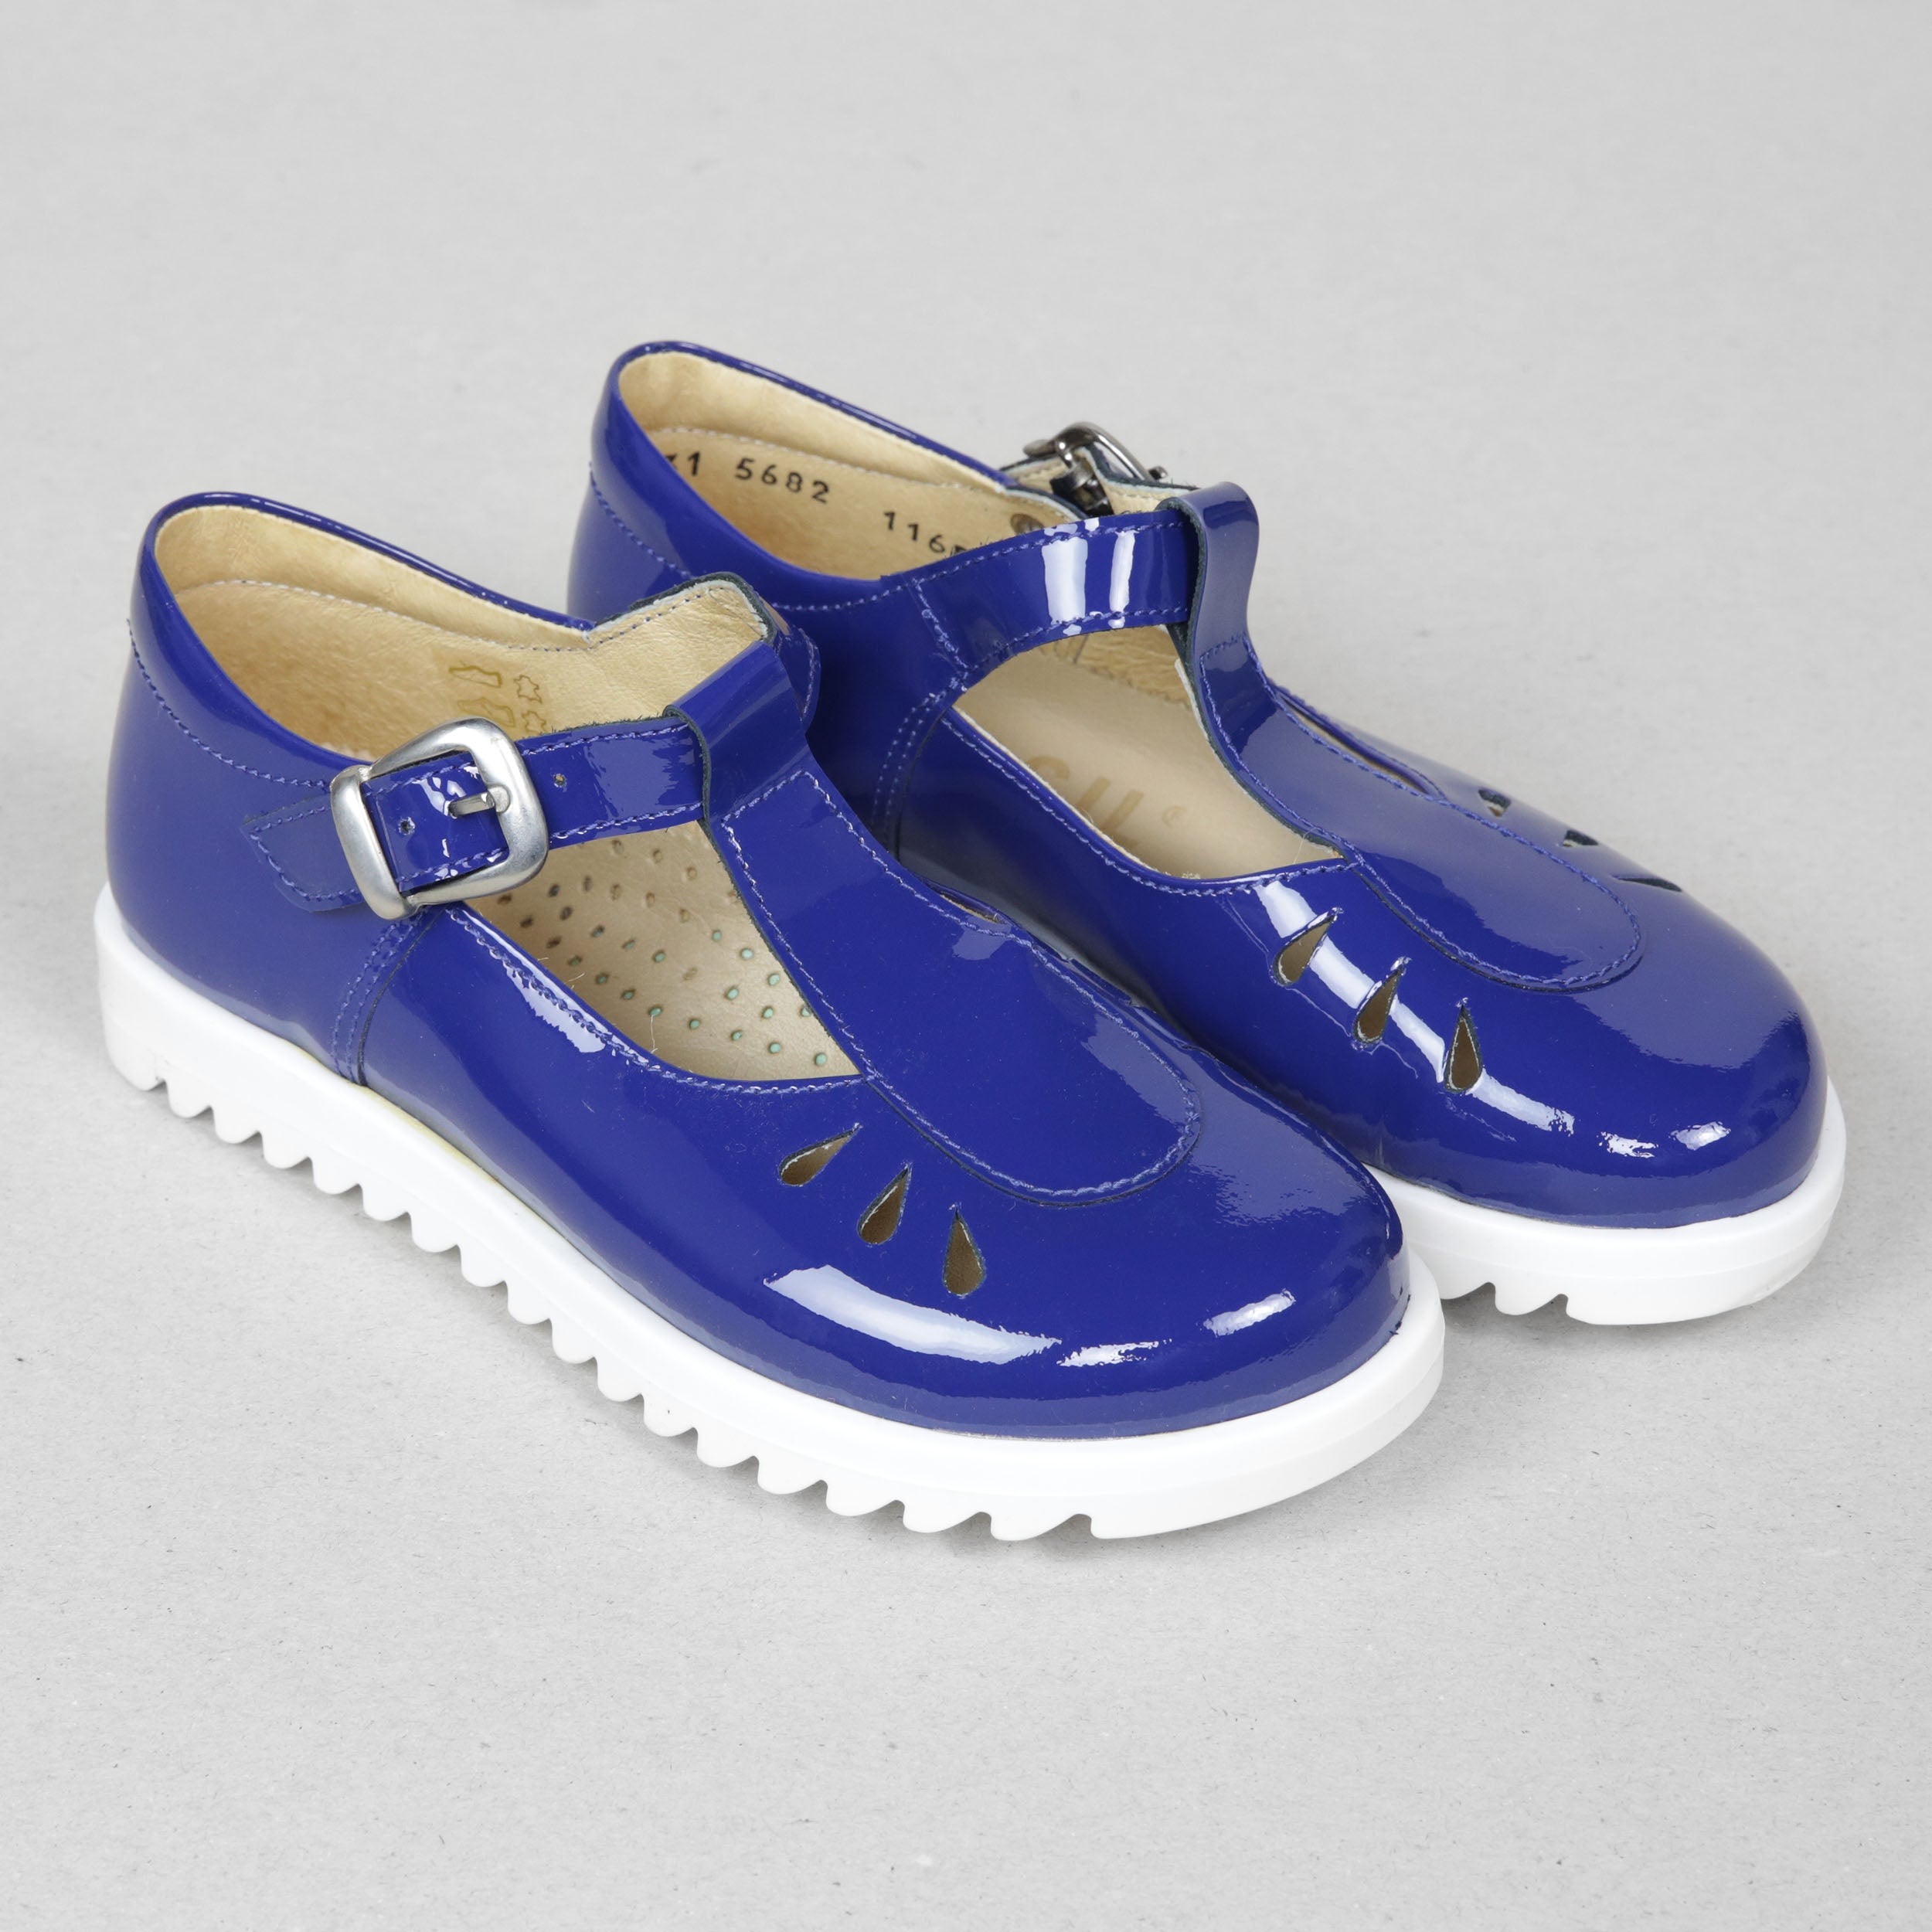 Petasil Tina Kids Girls Royal Blue Patent Leather T-Bar Shoes